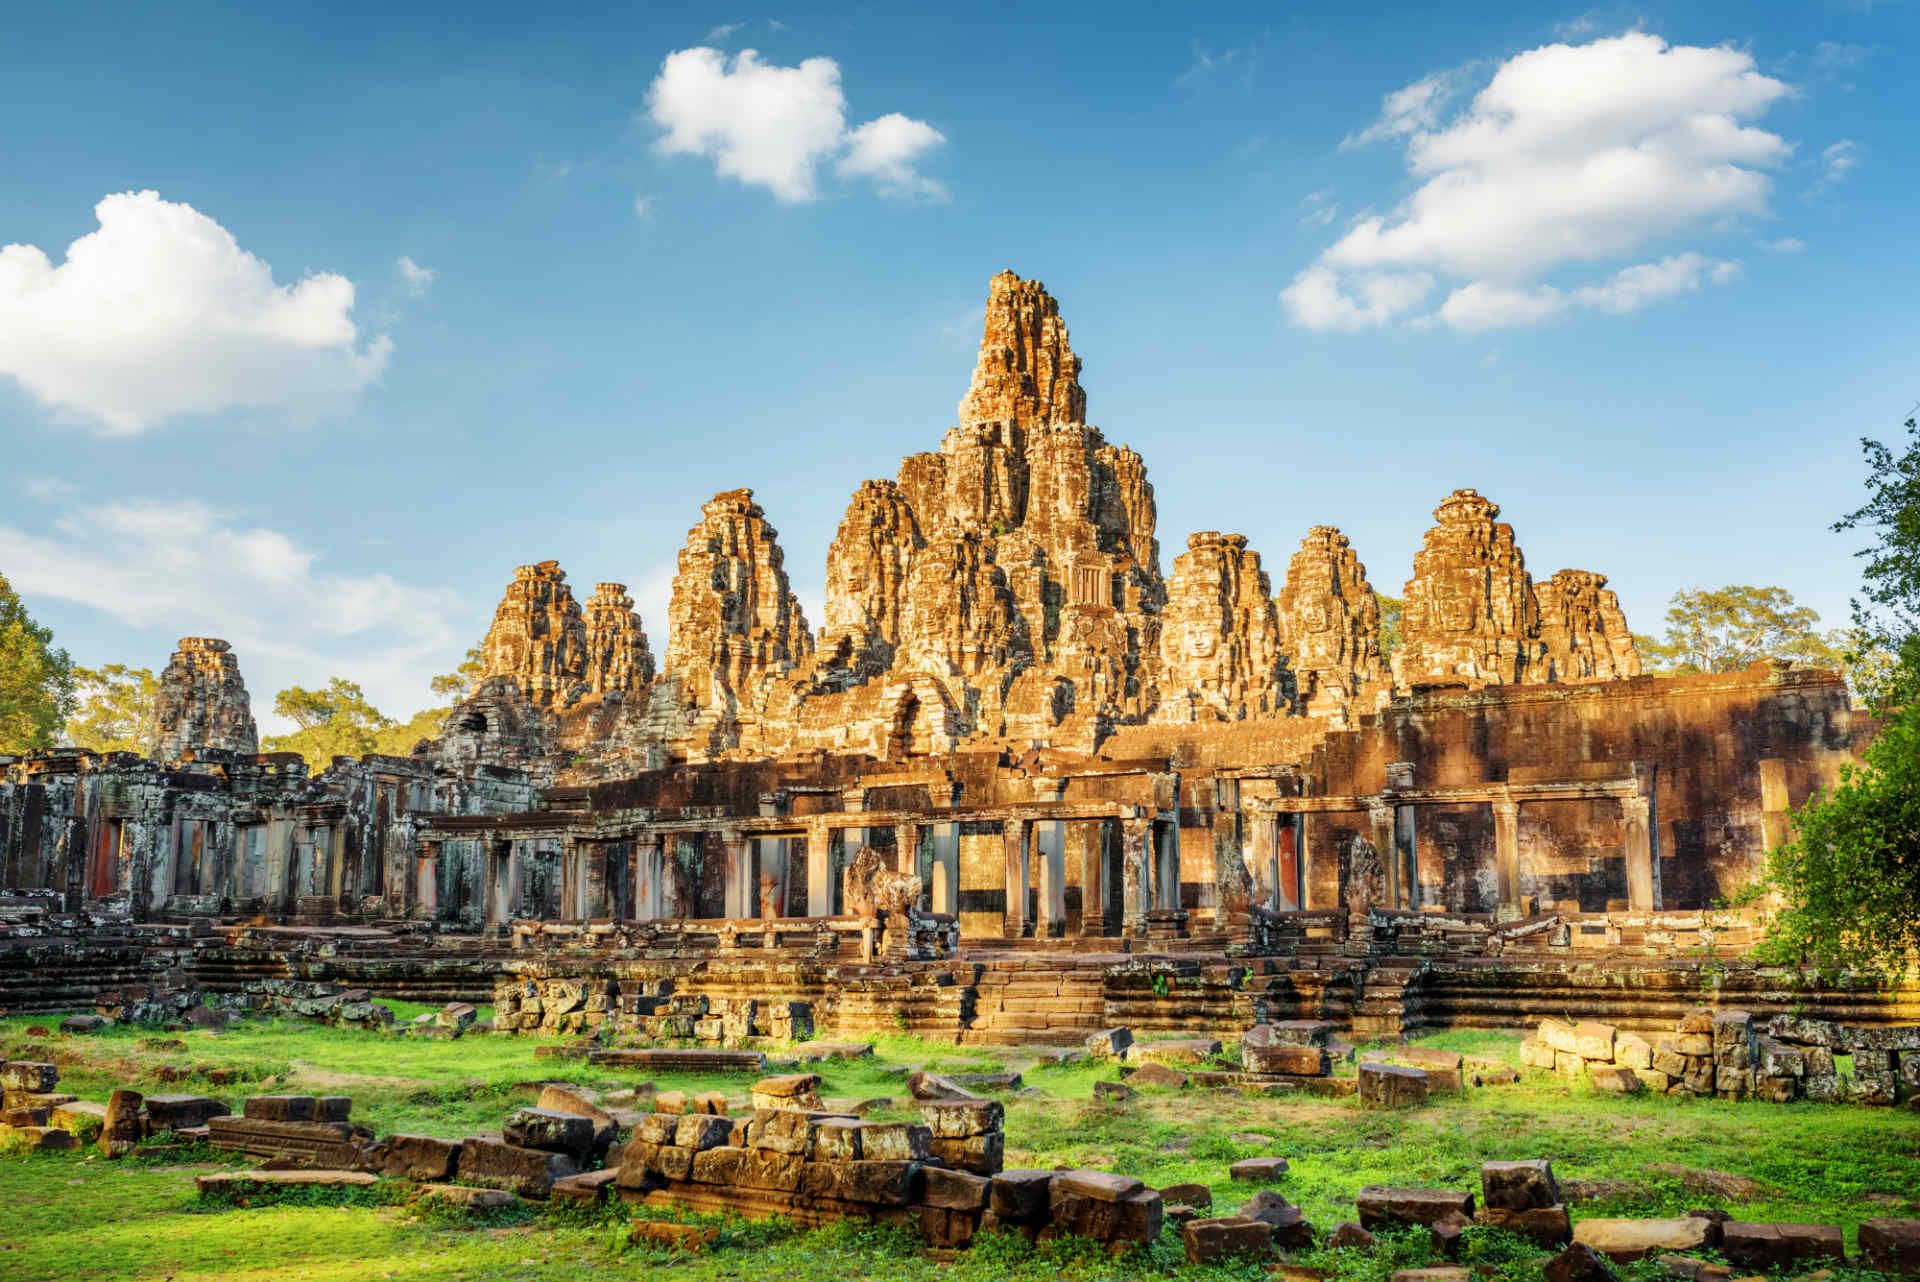 bayon-temple-angkor-thom-cambodia-shutterstock_339593069-2_1cab50c197